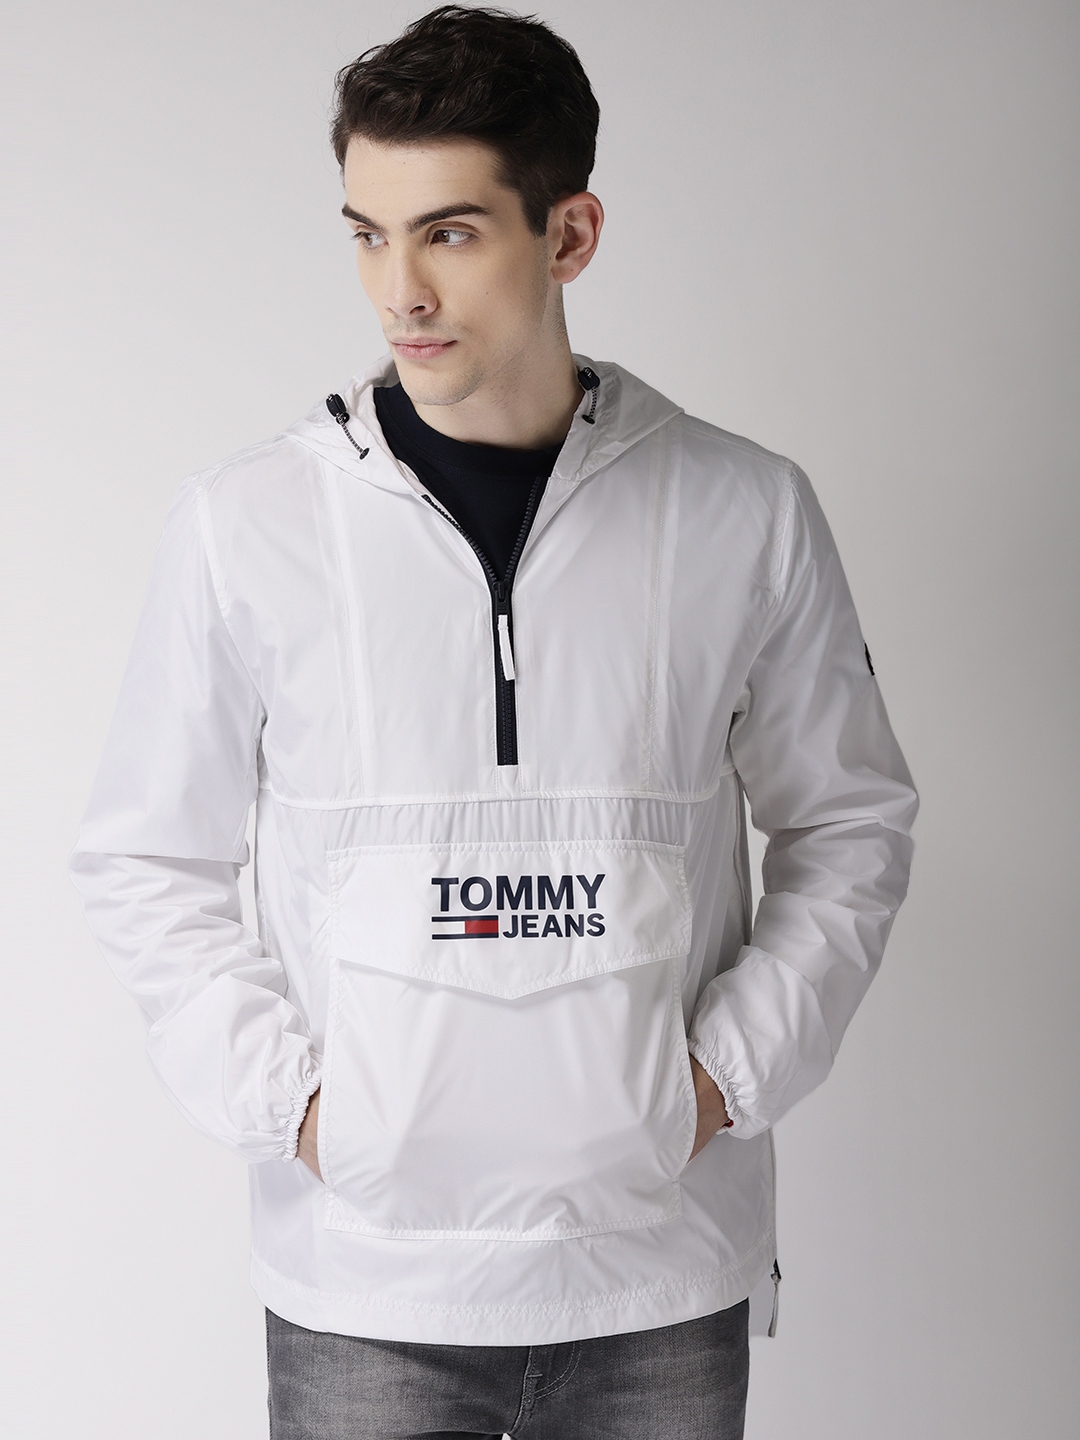 tommy hilfiger mens white jacket